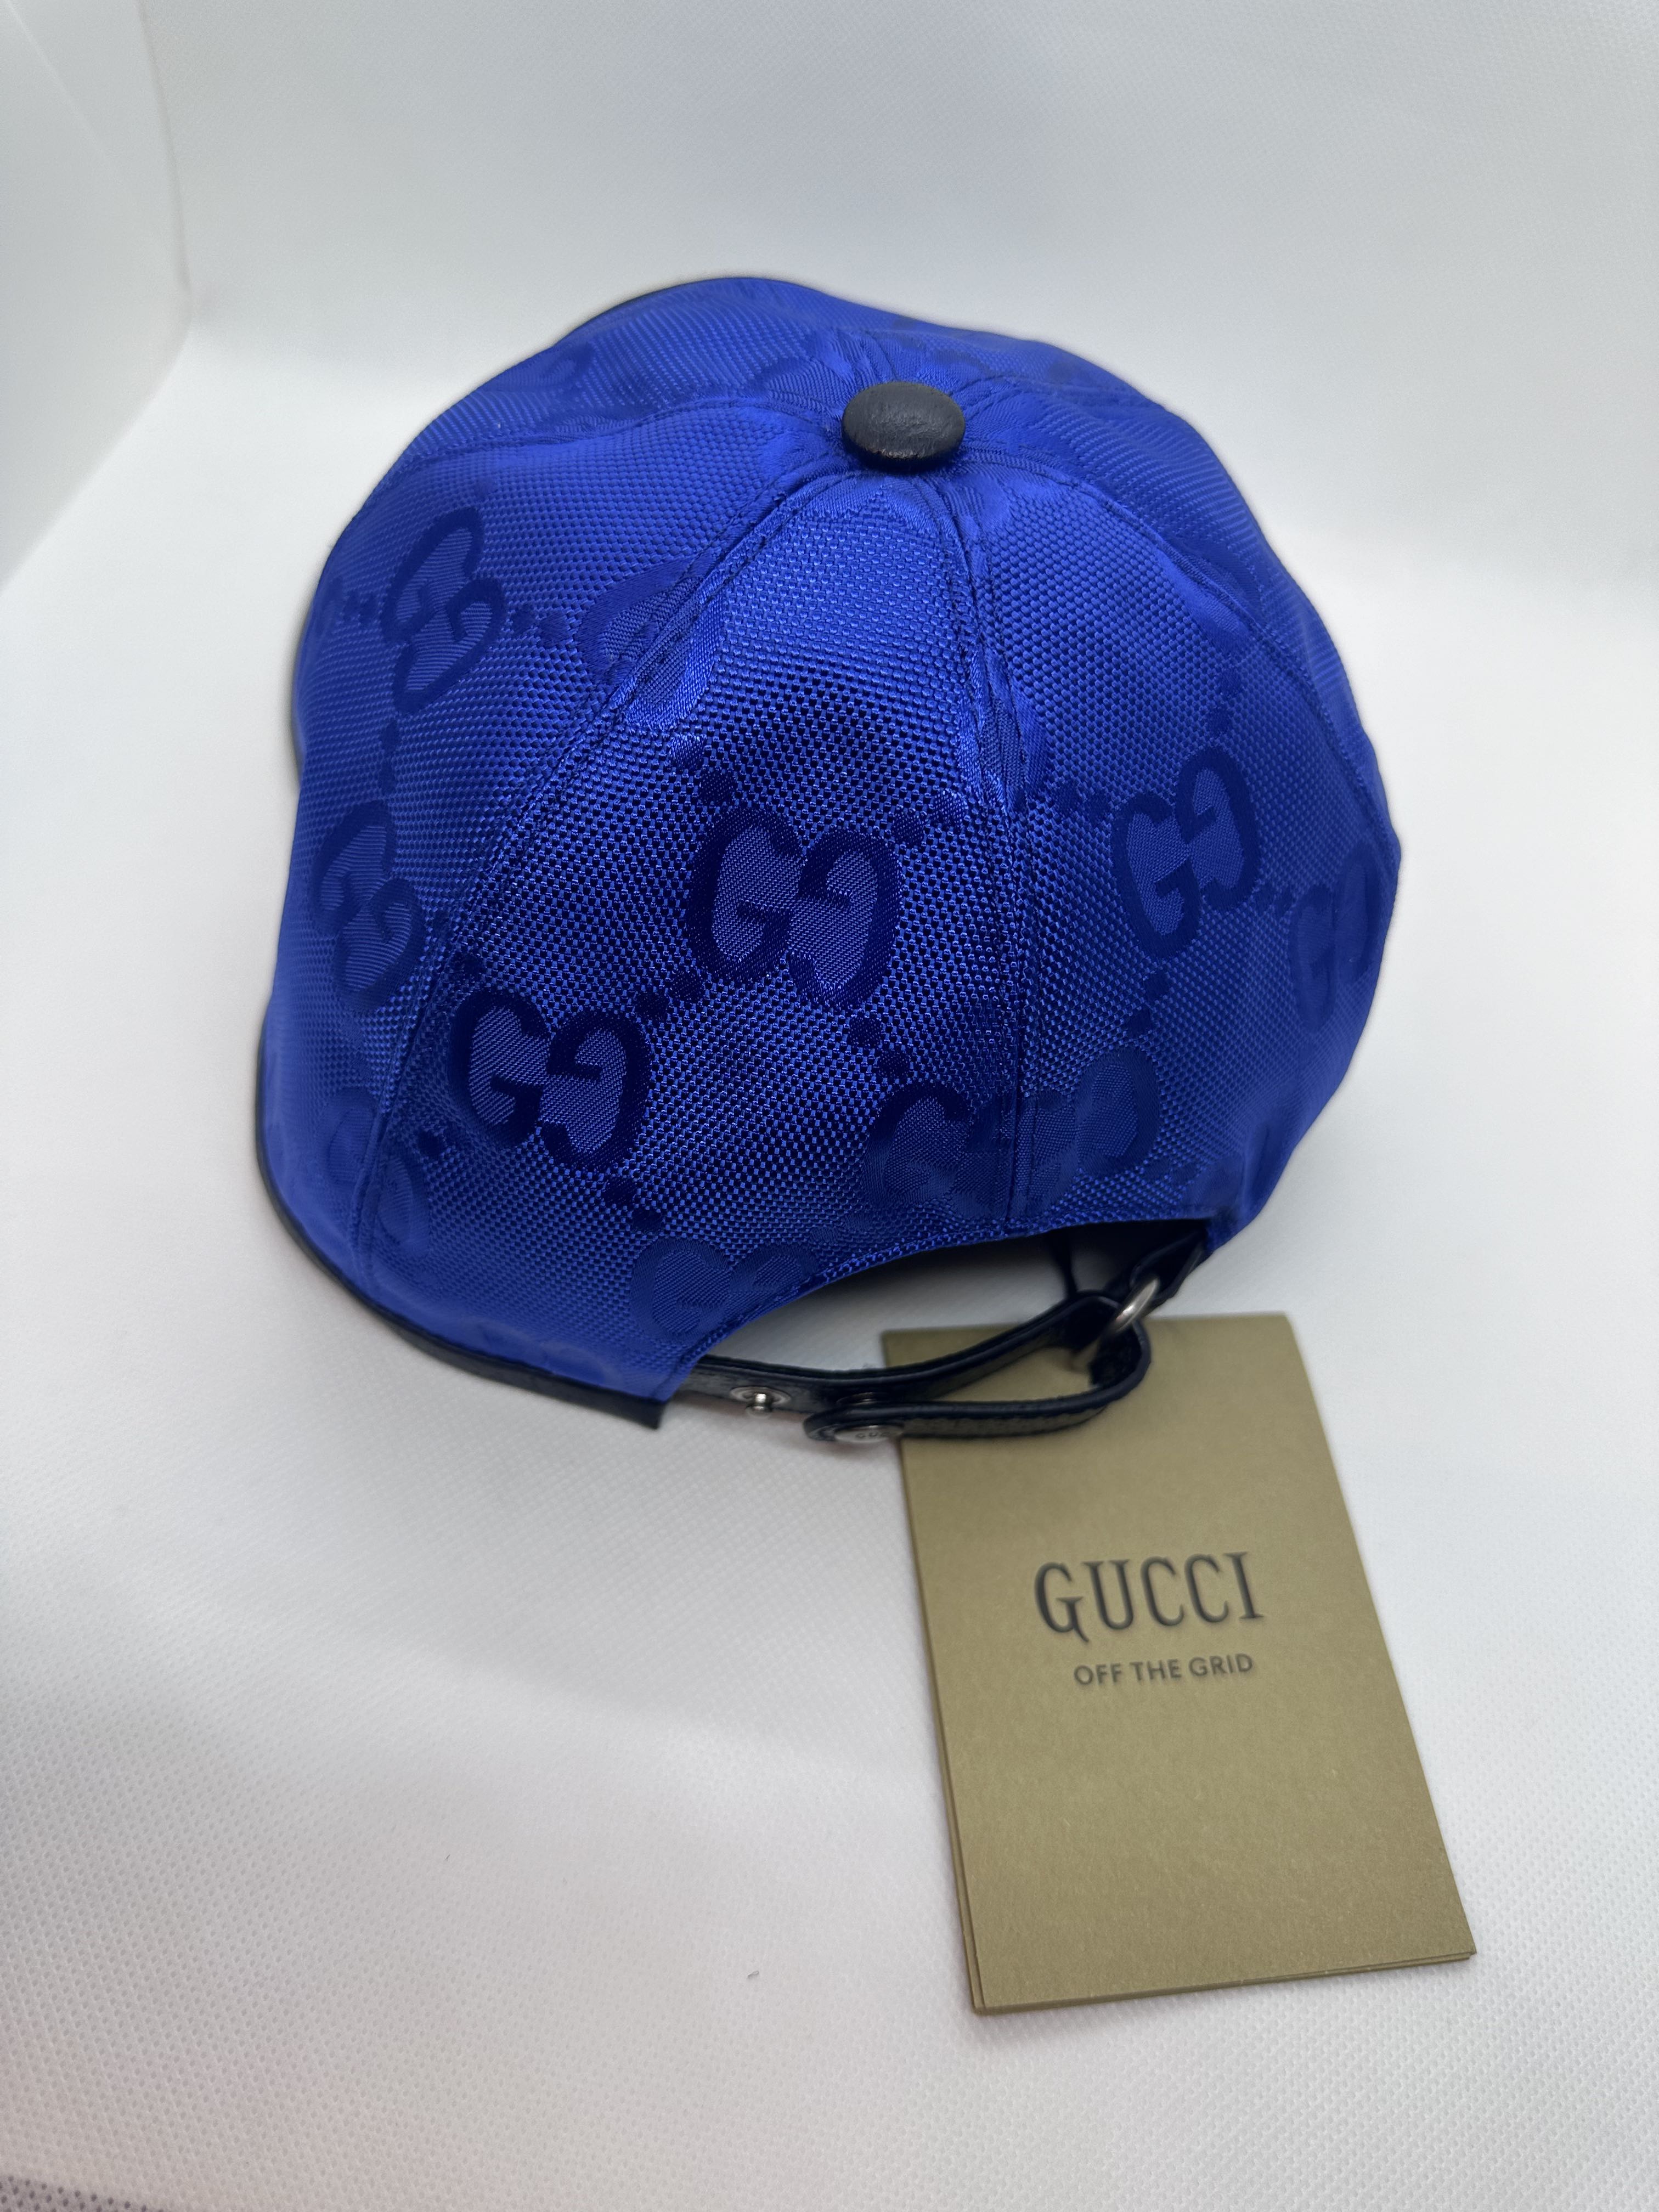 Gucci Off The Grid baseball hat - 2